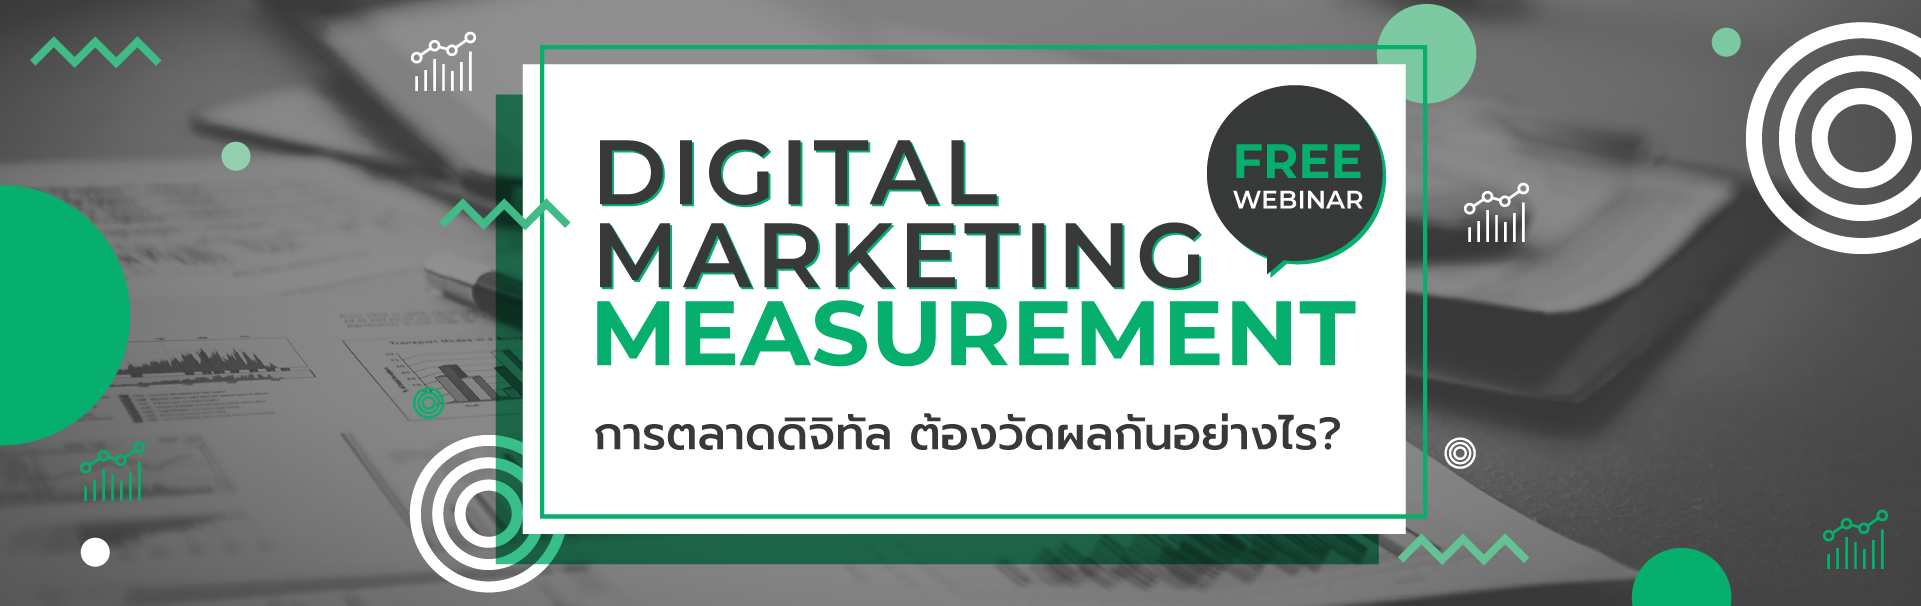 Digital Marketing Measurement